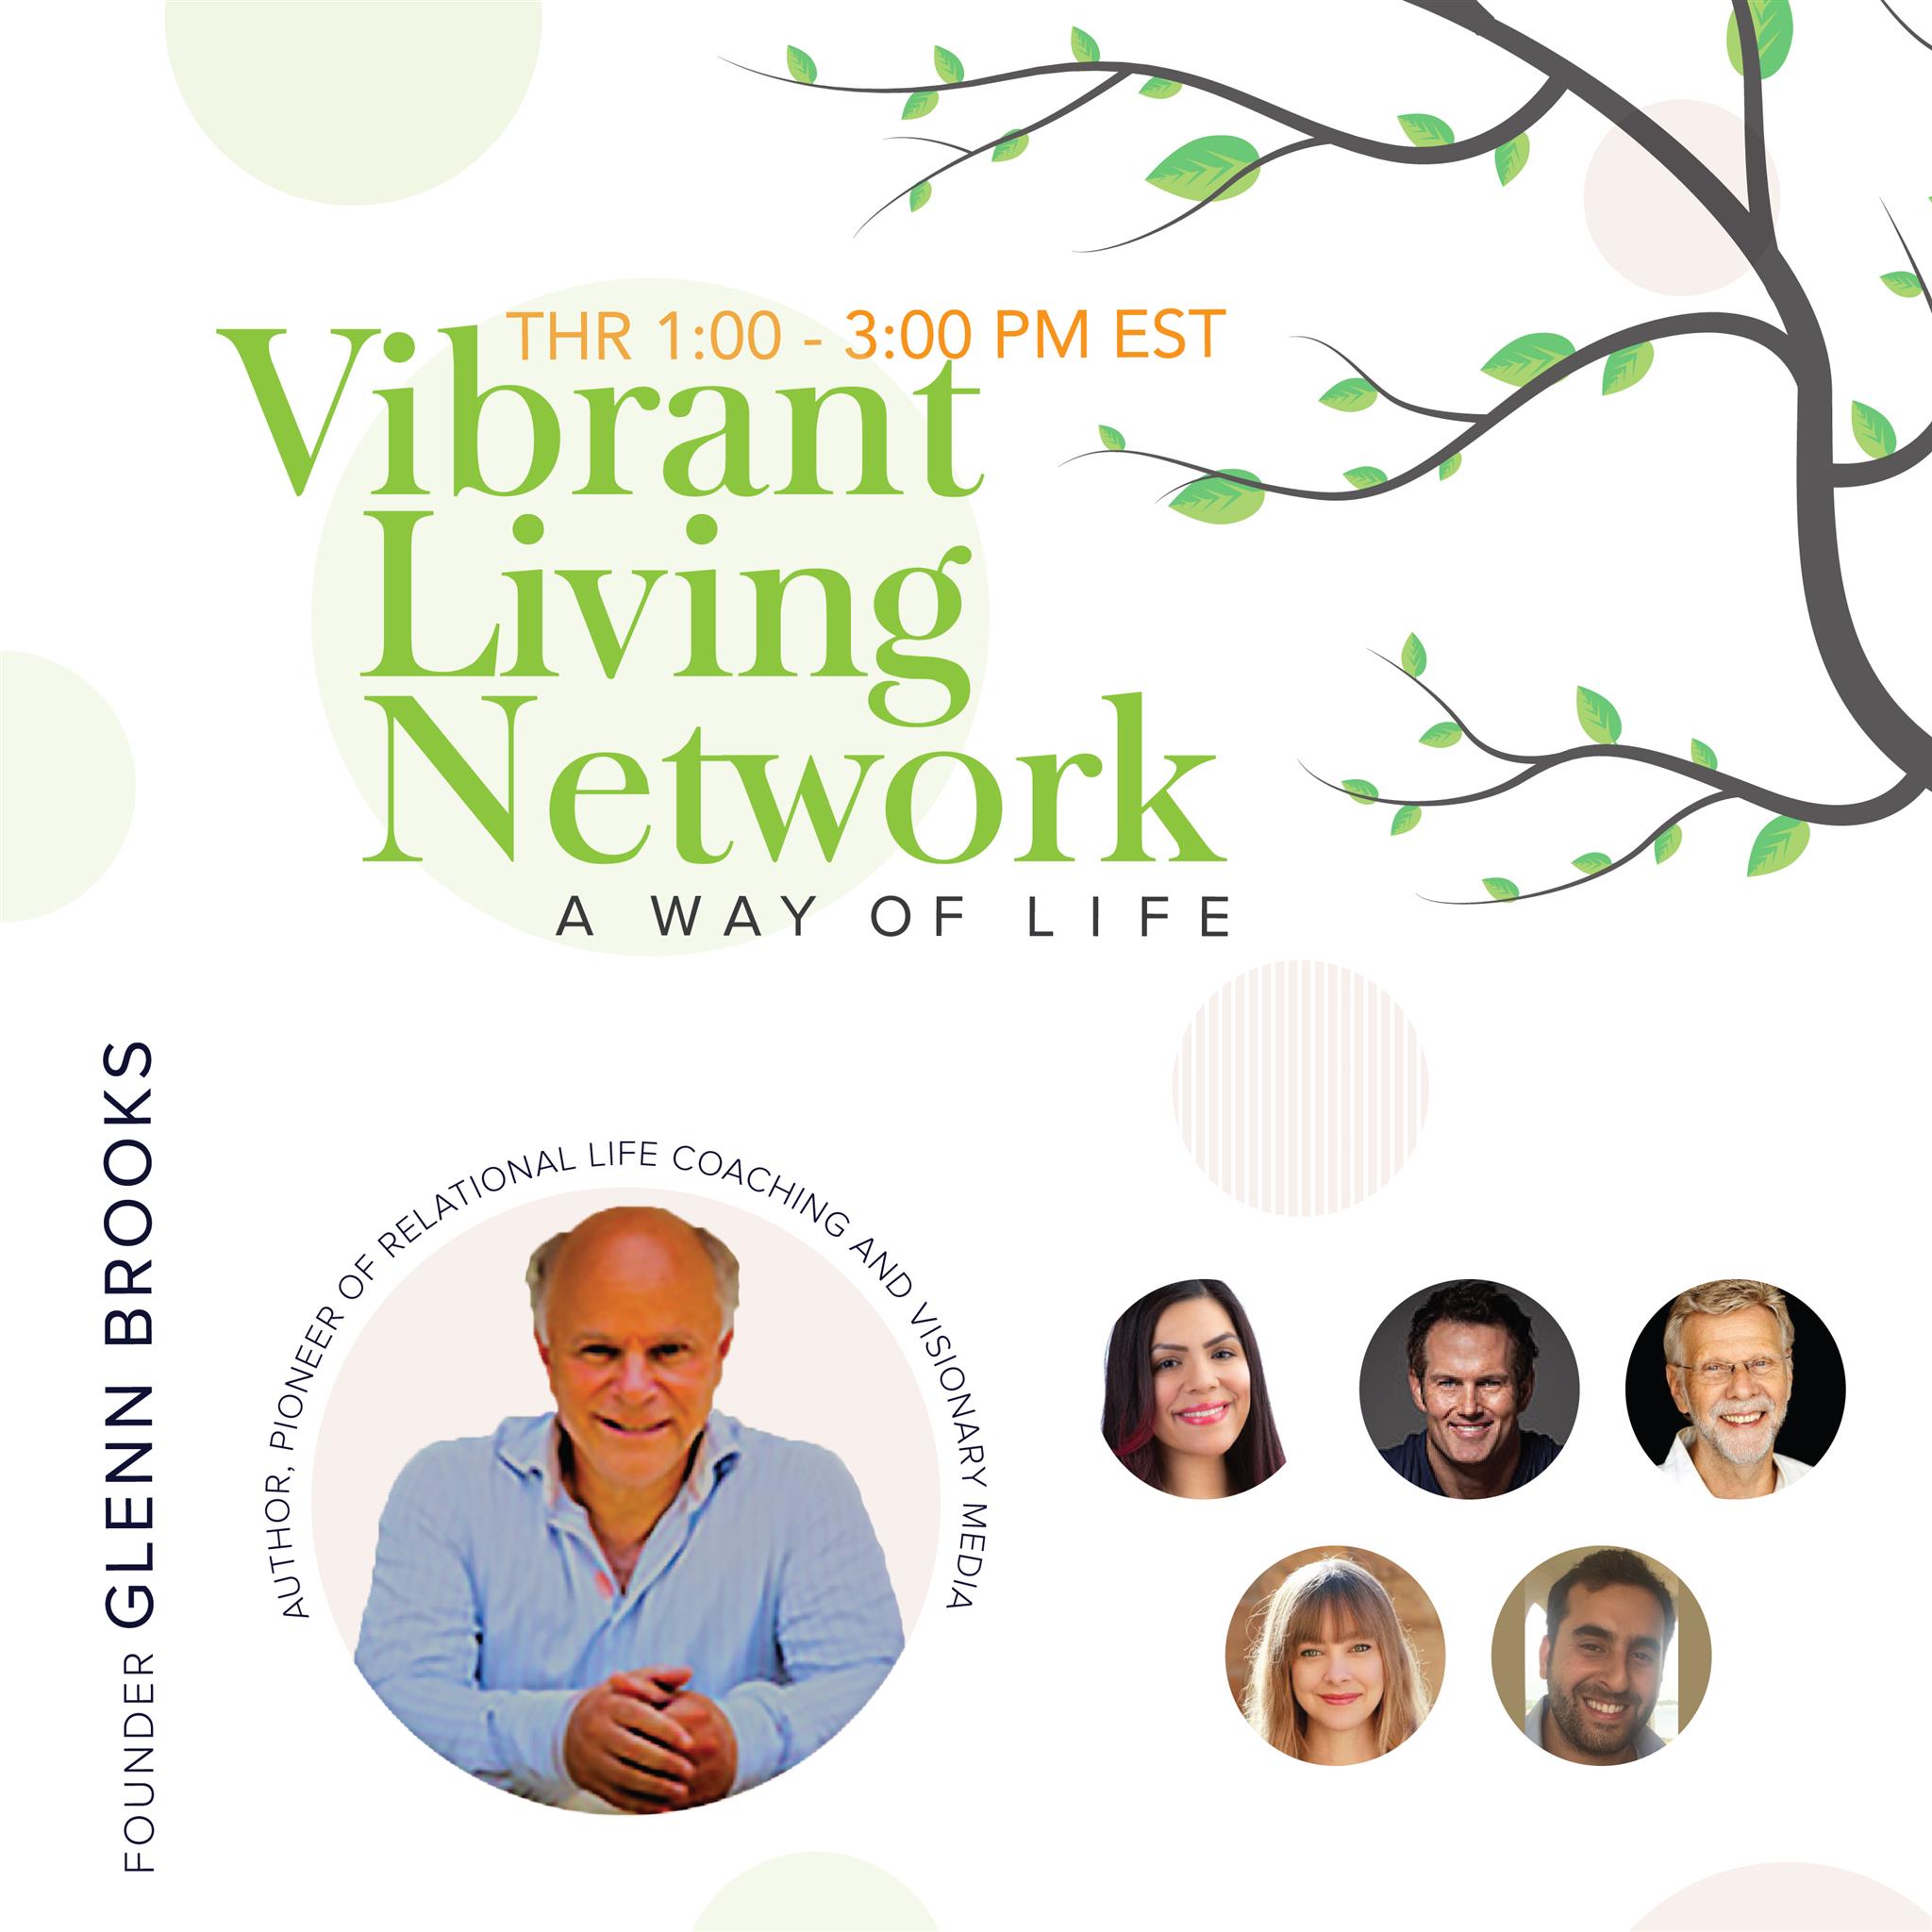 Vibrant Living Network - January 4, 2018